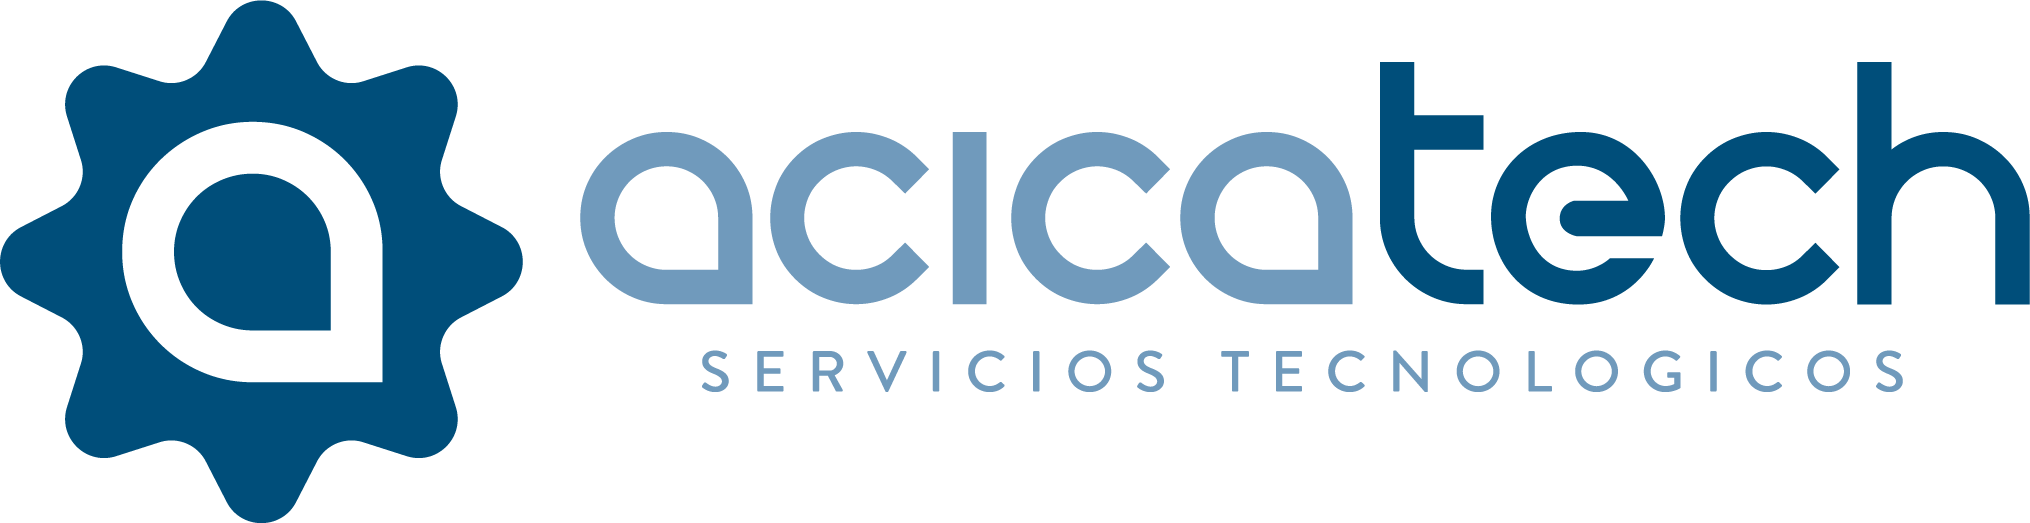 Acicatech_logo